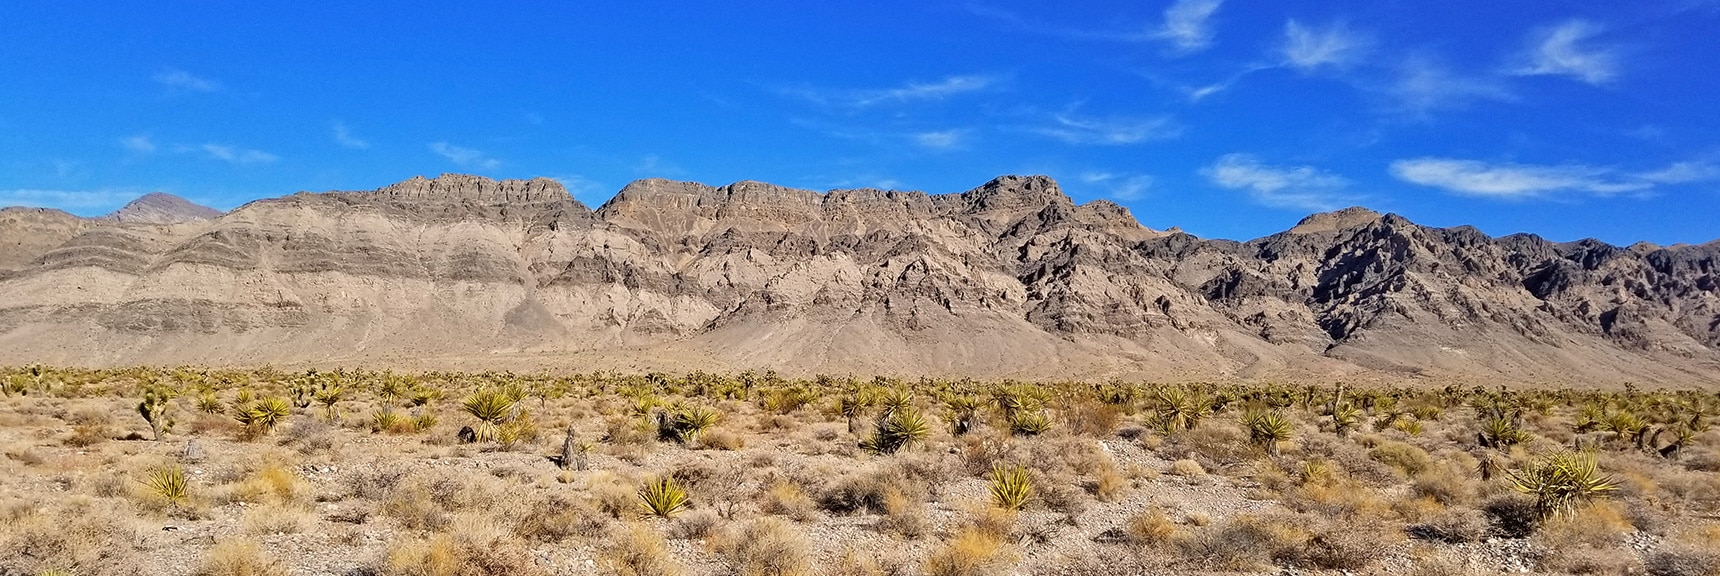 South Side of Fossil Ridge from Gass Peak Road | Gass Peak Road Circuit | Desert National Wildlife Refuge | Nevada